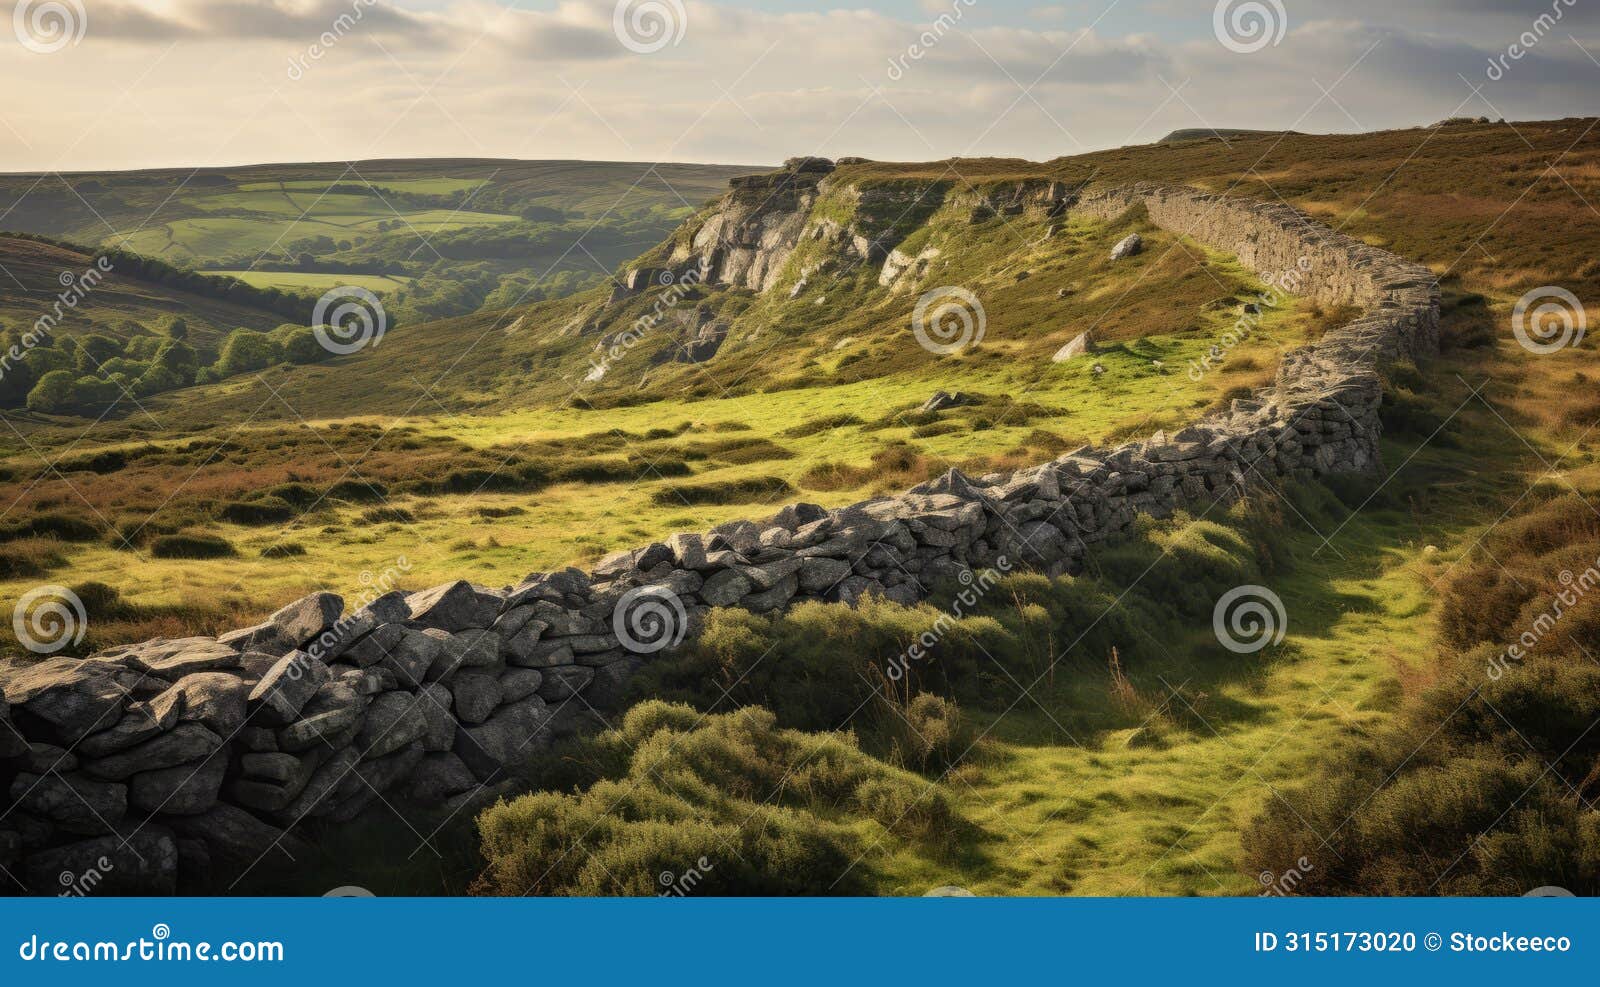 majestic stone wall on yorkshire hillside: a captivating morning scene